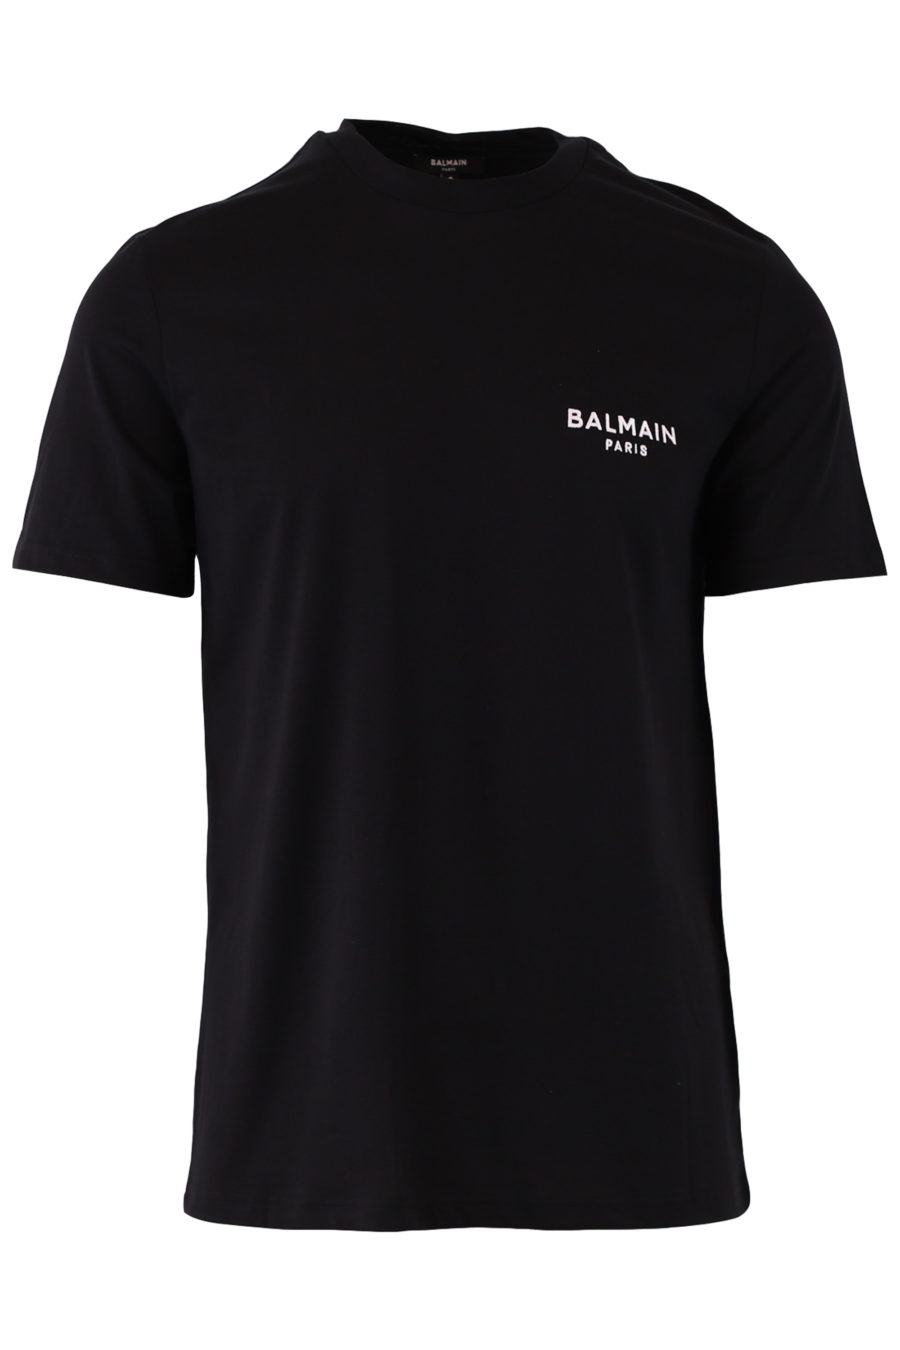 Camiseta interior negra con logo blanco bordado - 7c8044bd6b7fab4bd308b5ea696013f49a81cceb